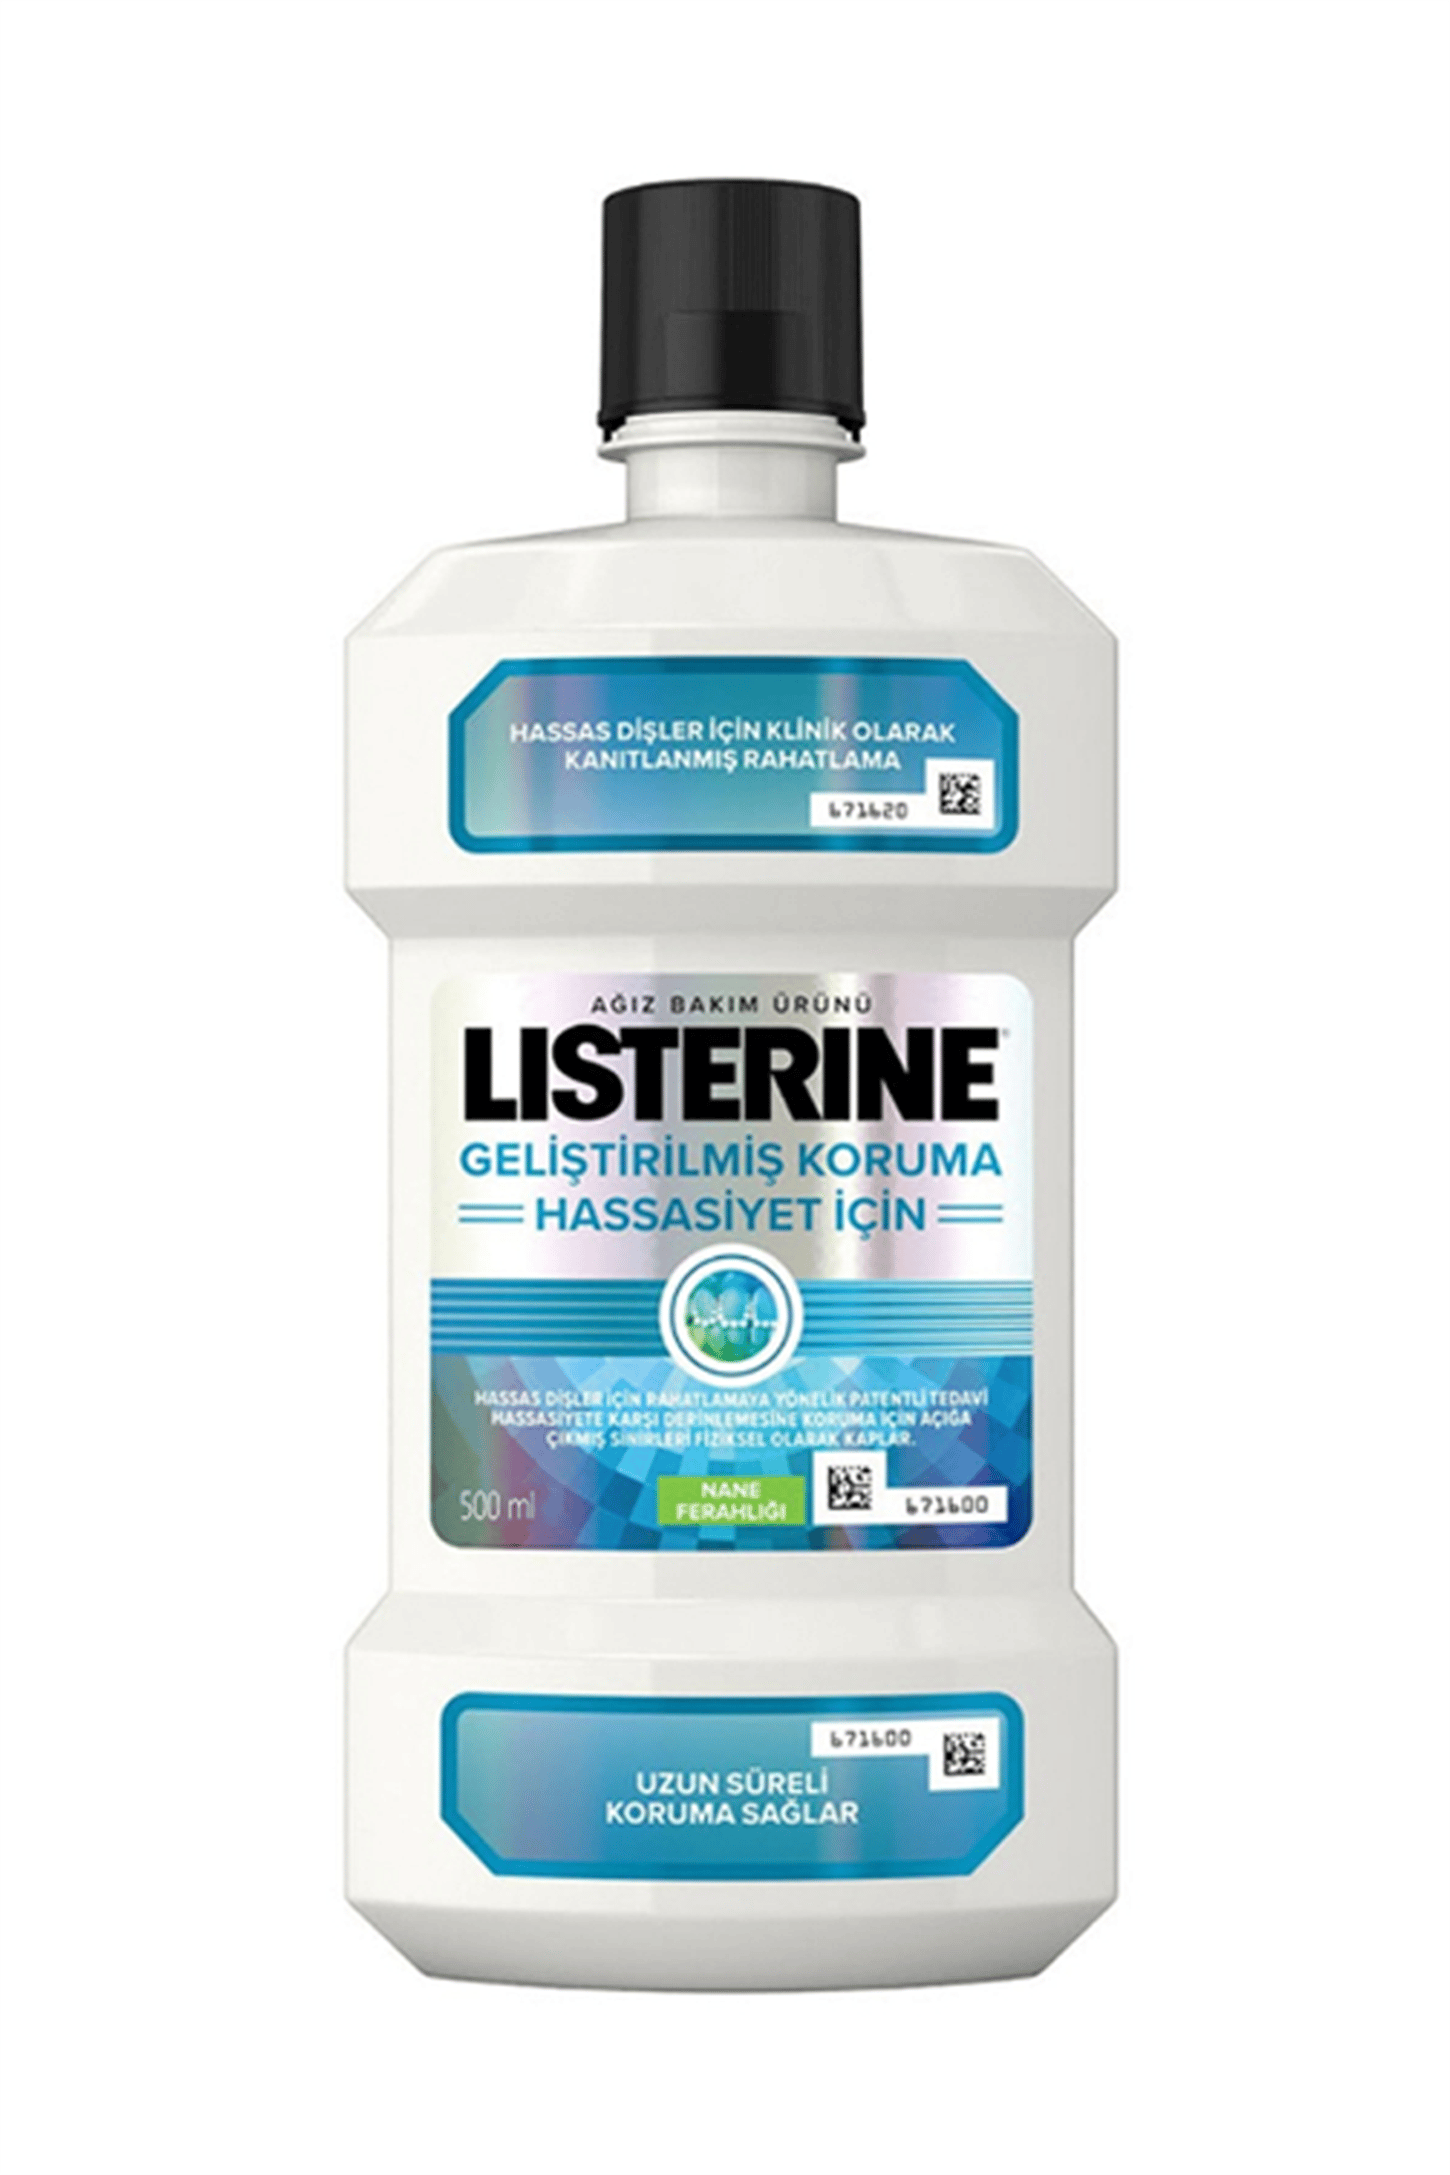 Listerine Cool Mint Hafif Tat Alkolsüz Ağız Bakım Suyu 500 ml